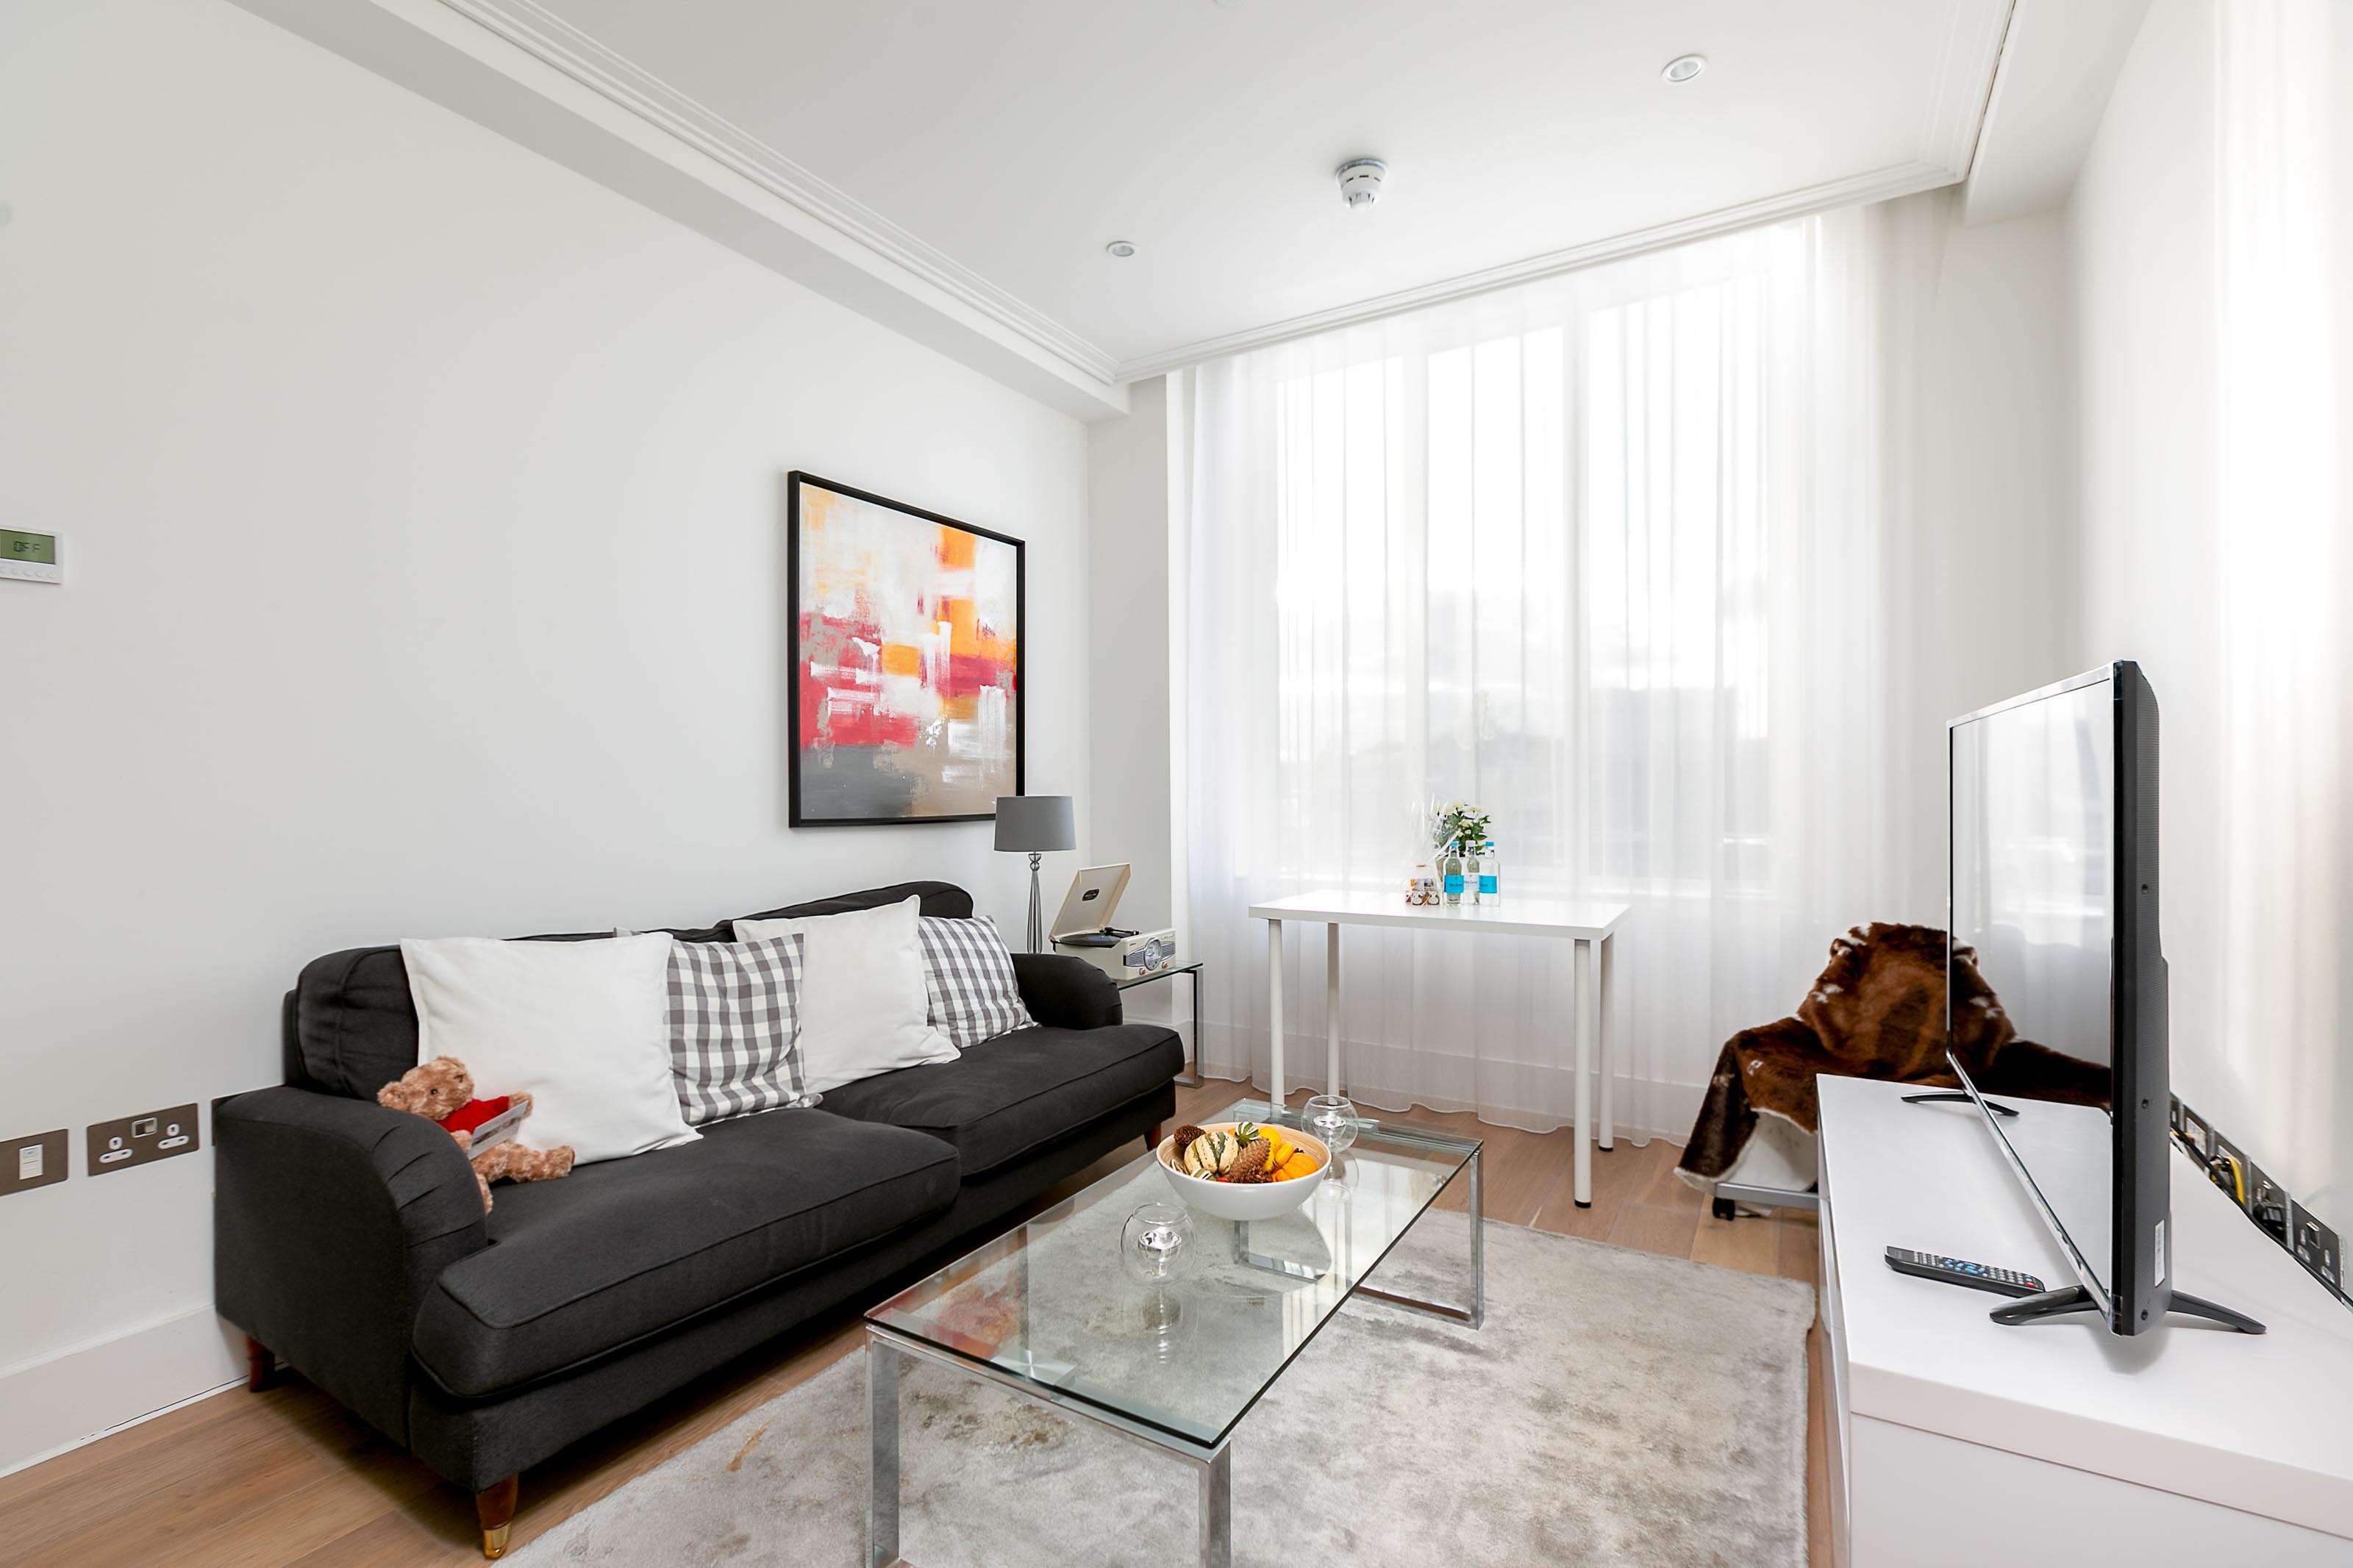 Lovelydays luxury service apartment rental - London - Covent Garden - Prince's House 605 - Lovelysuite - 2 bedrooms - 2 bathrooms - Luxury living room - Comfortable sofa - TV system - A/C system - dc3685afe51a - Lovelydays